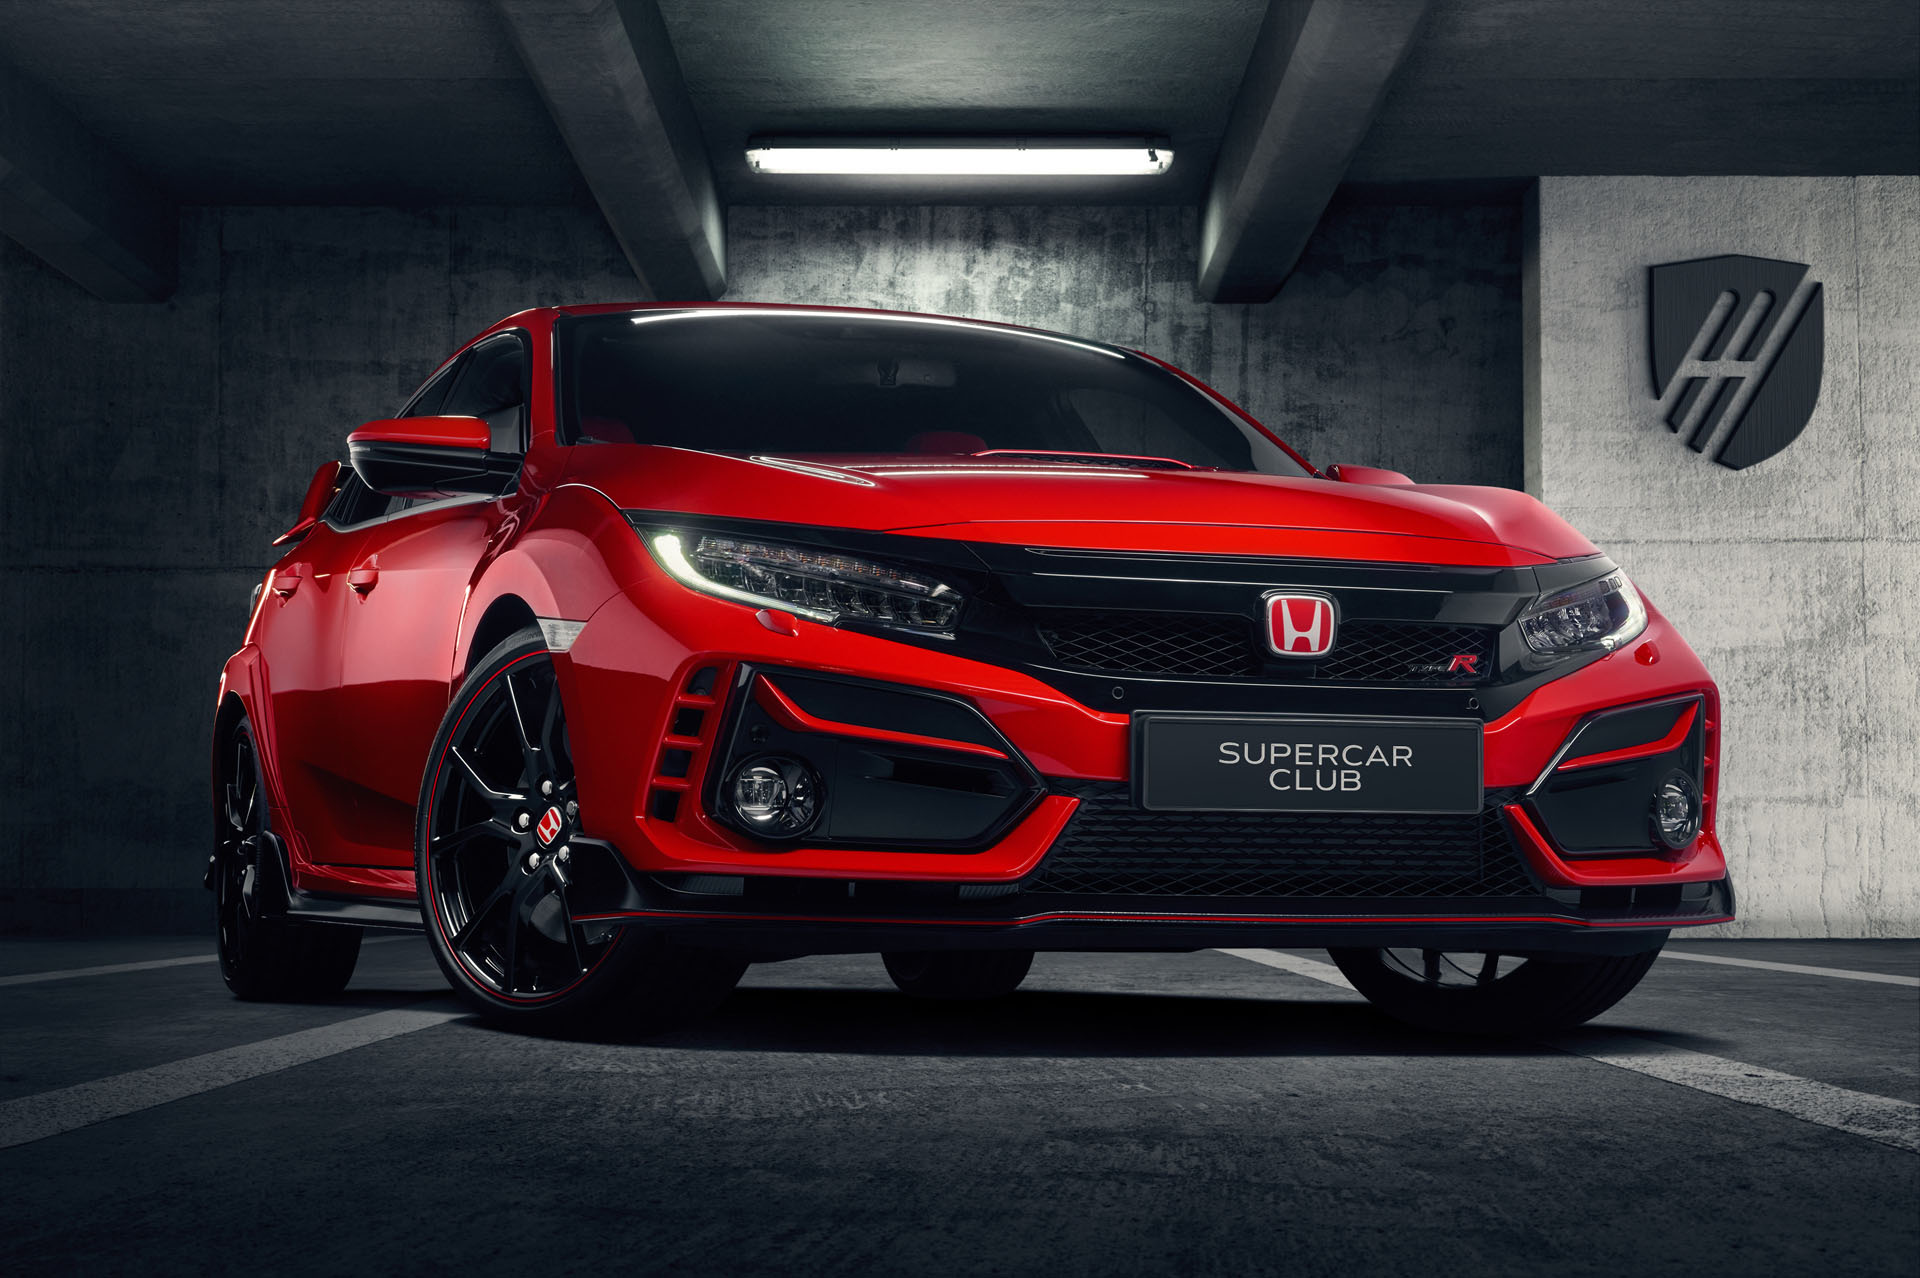 https://www.supercarclub.pl/wp-content/uploads/2021/11/Honda-Civic-TypeR.jpg